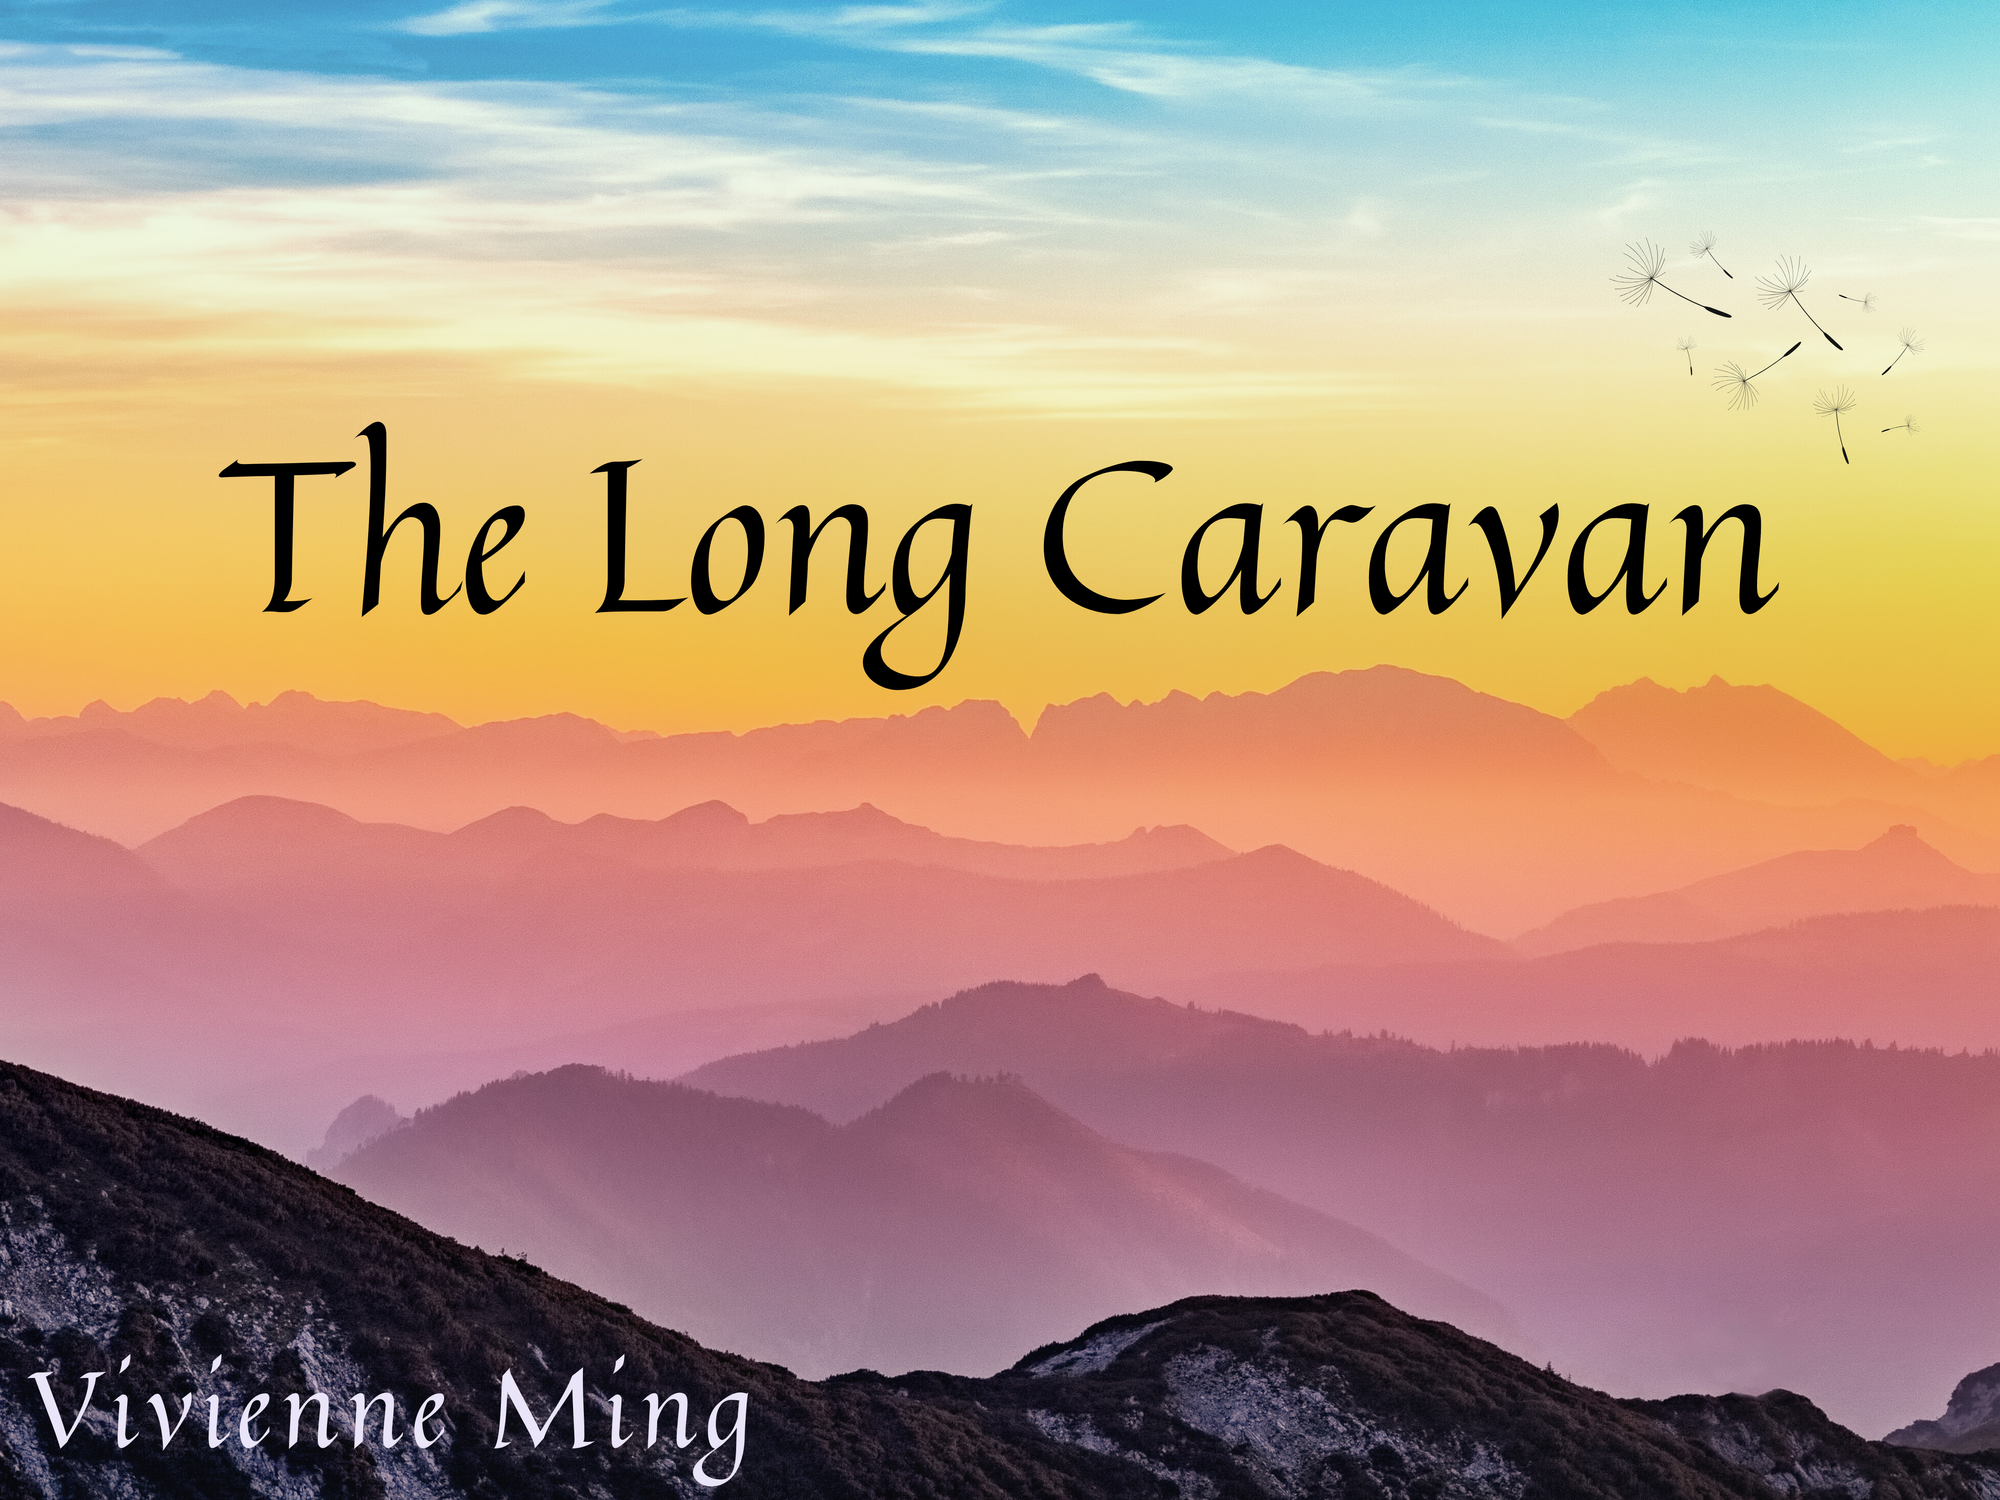 The Long Caravan